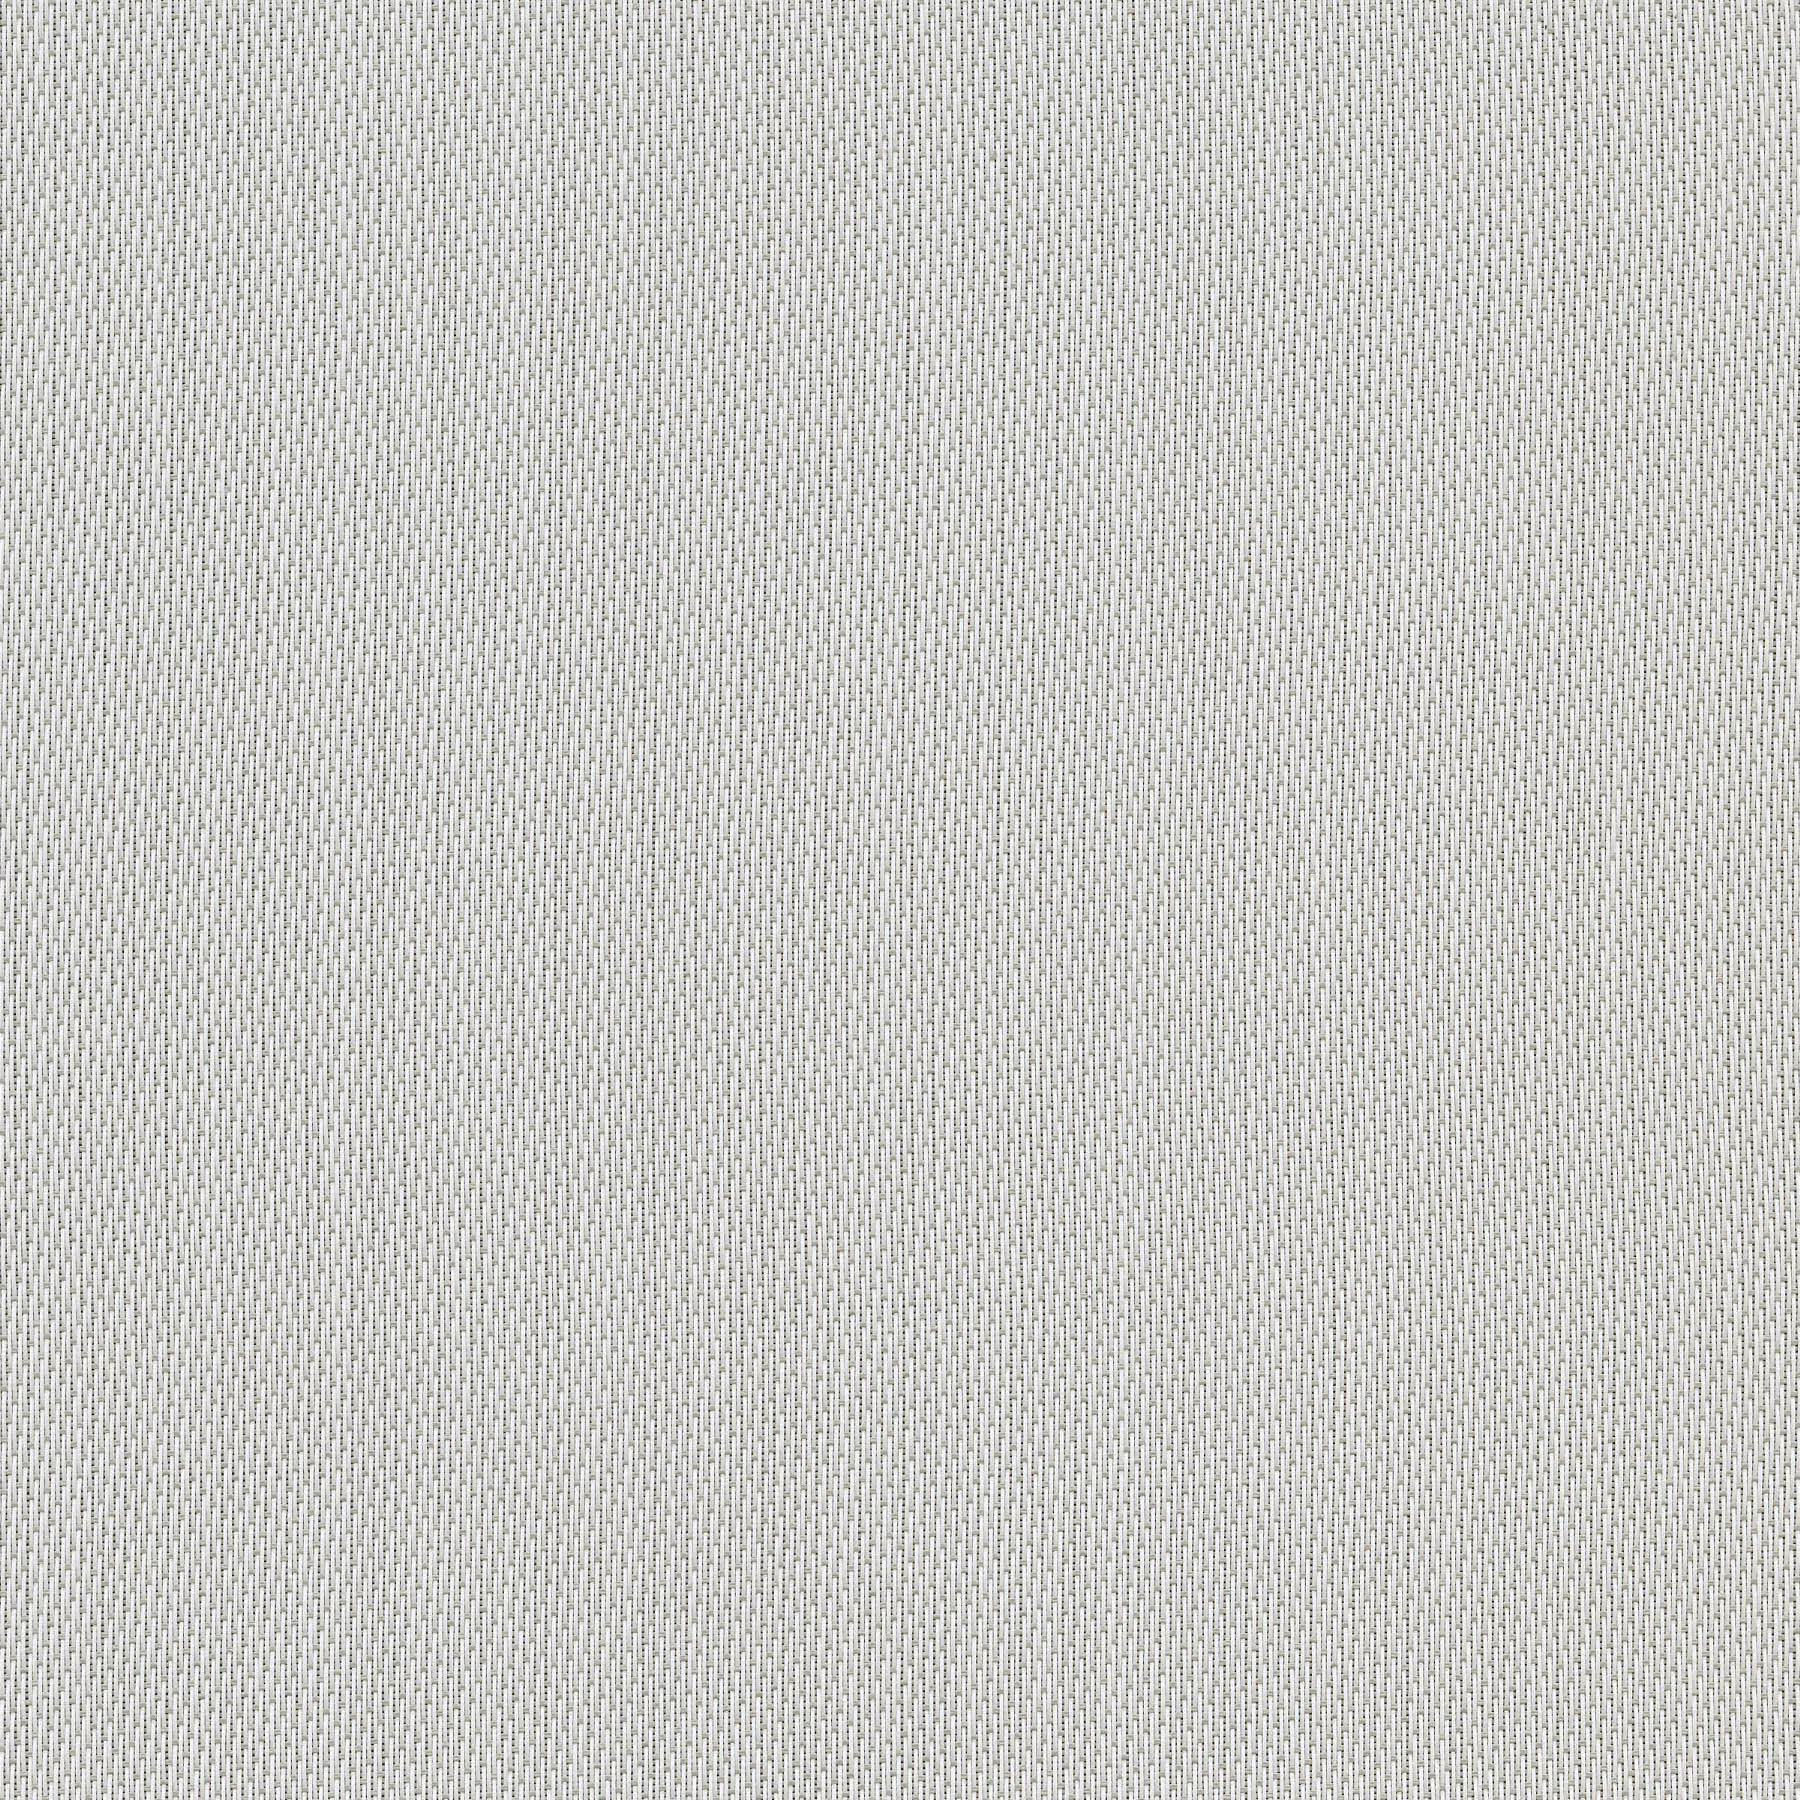 Altex - Fabric - SHEERWEAVE 2703 - Pearl Grey/White - 166